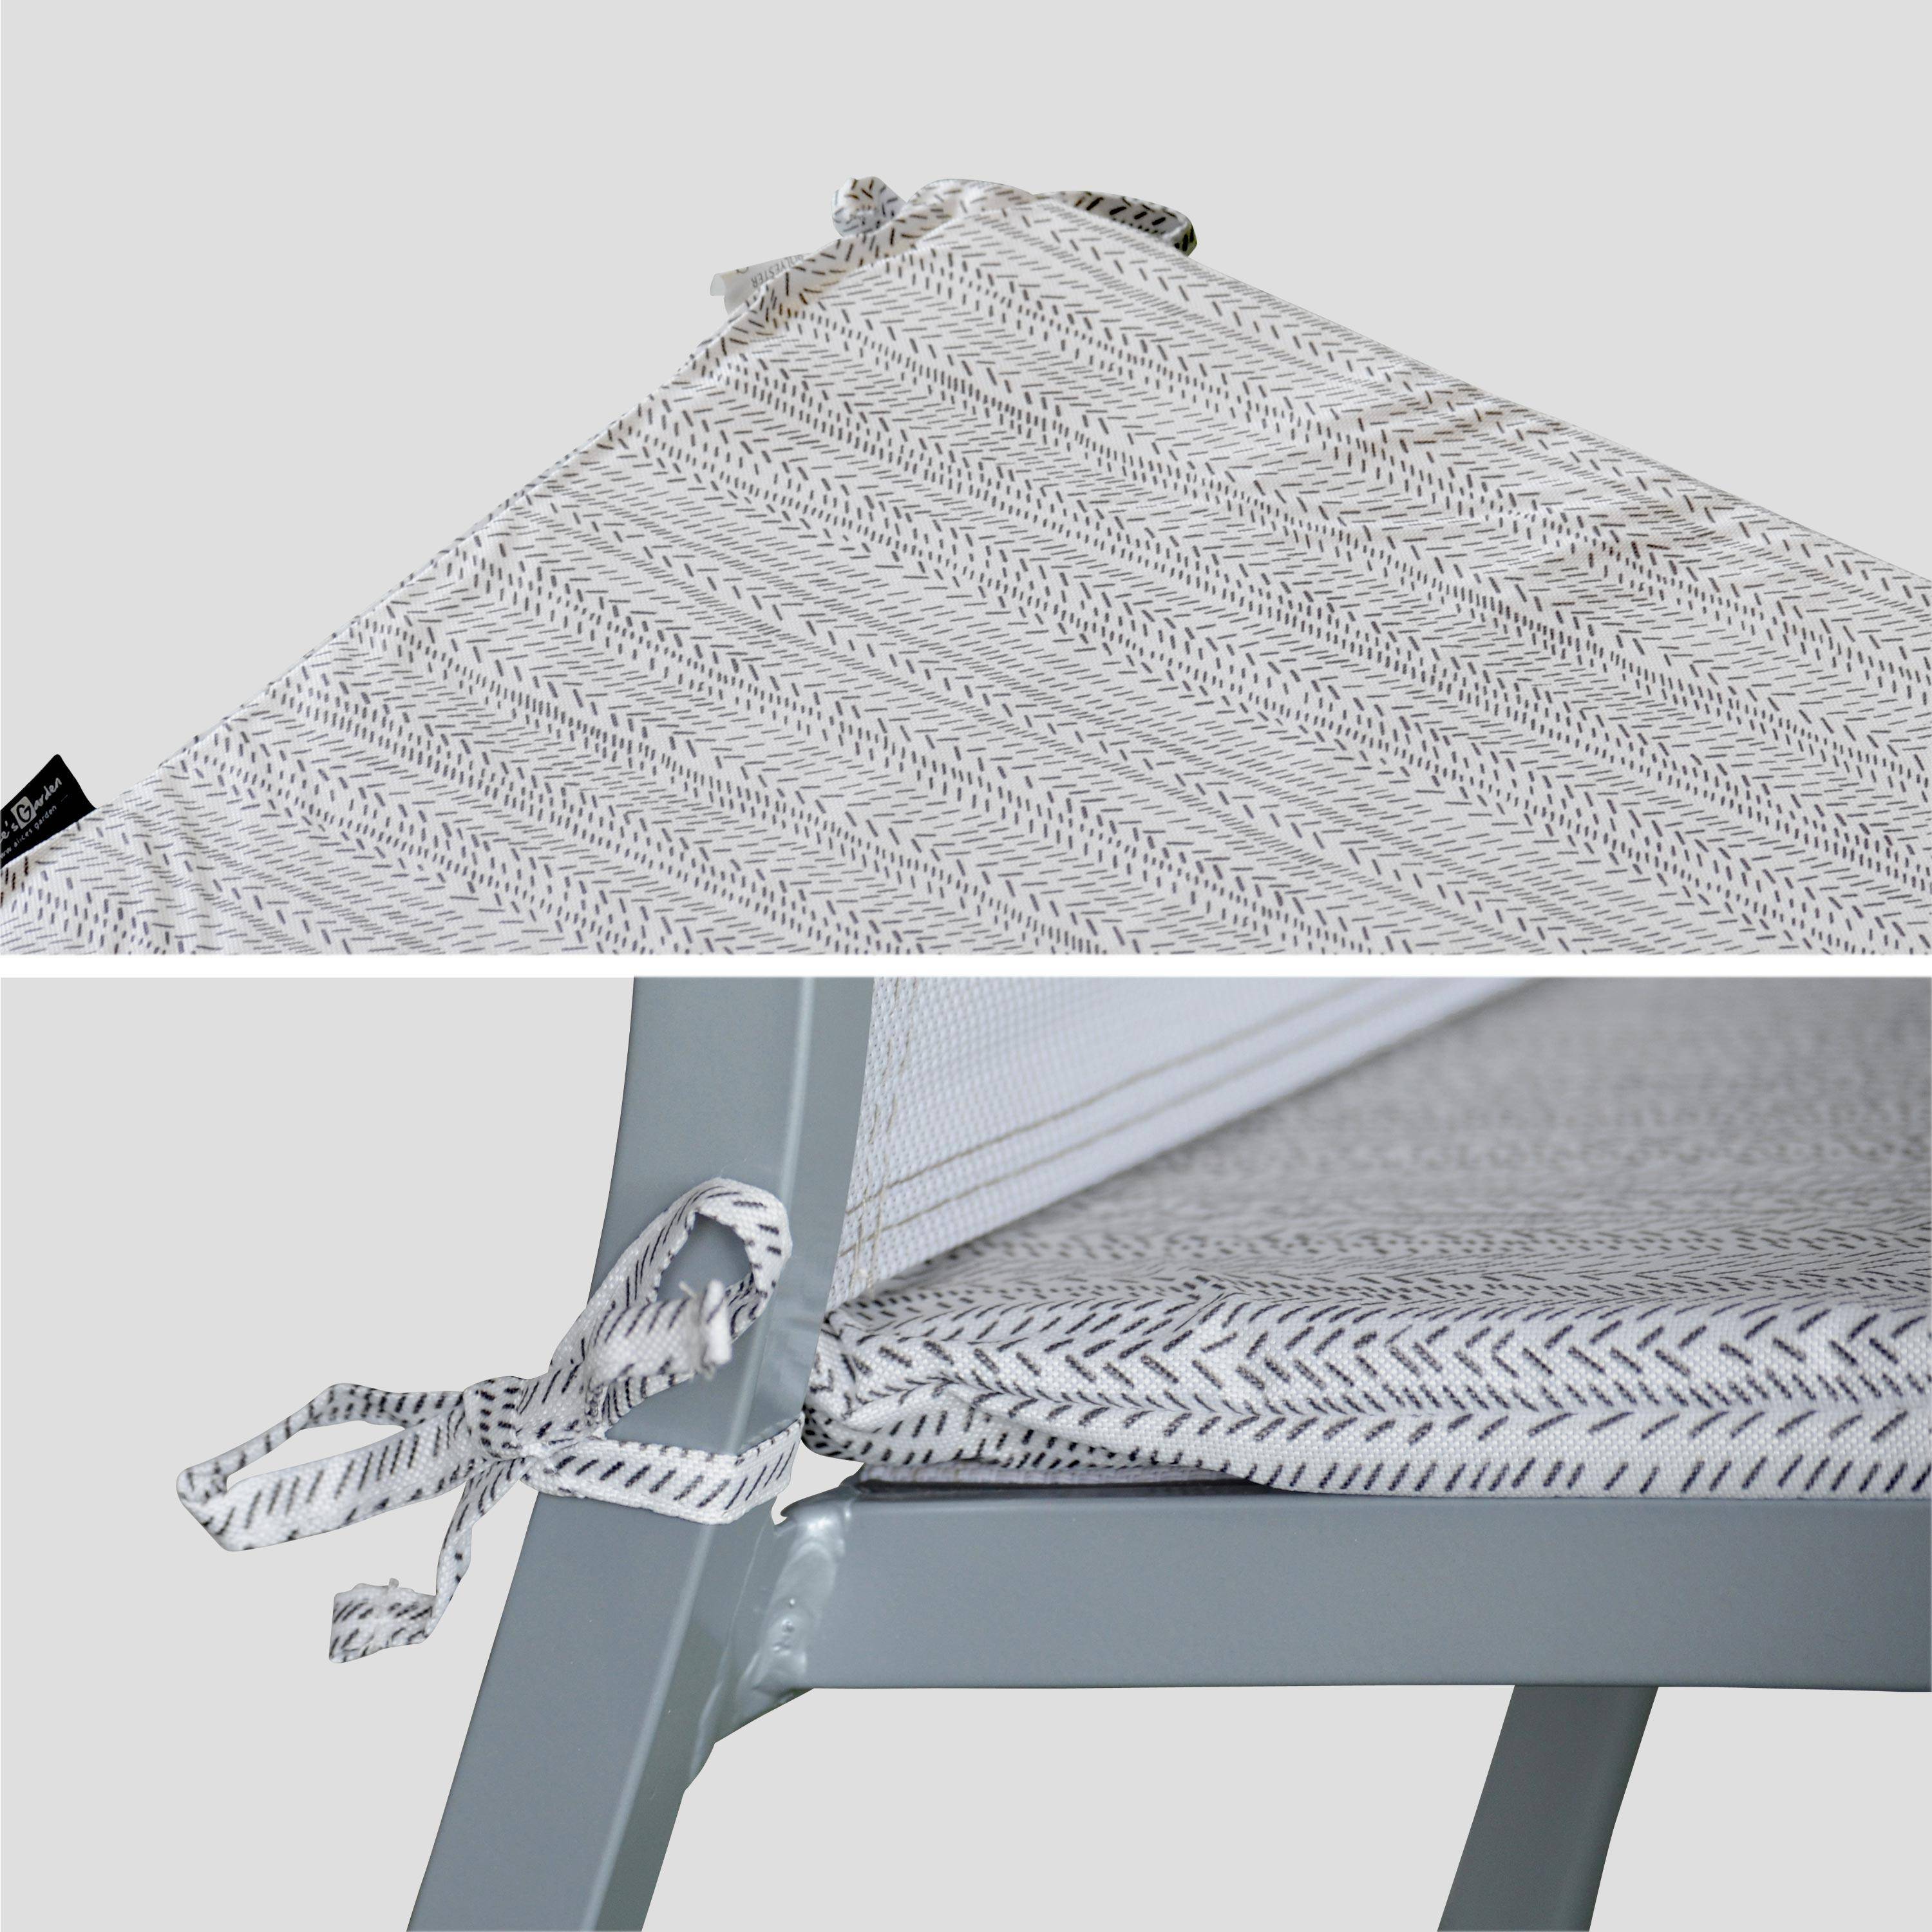 Set van 4 stoelkussens - 43 x 40 cm - waterafstotende stof, omkeerbaar, anti-UV, met bevestigingskoordjes, grijs zigzag motief Photo3